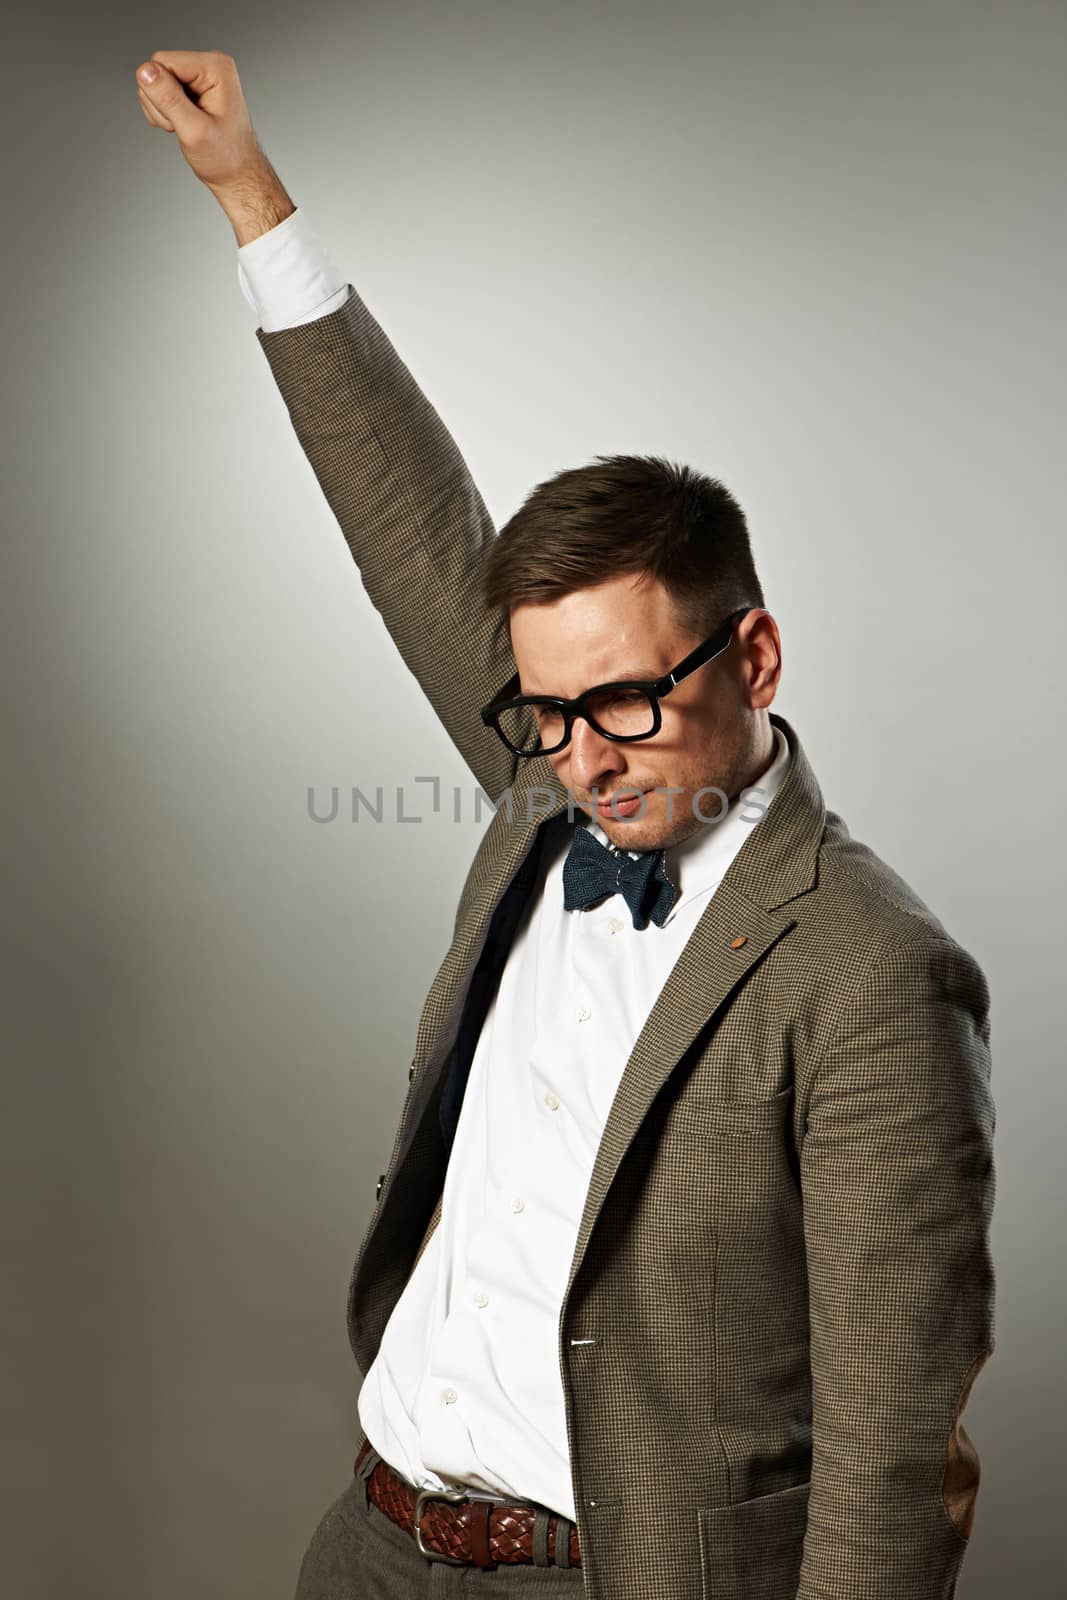 Superhero nerd in eyeglasses and bow tie against grey background